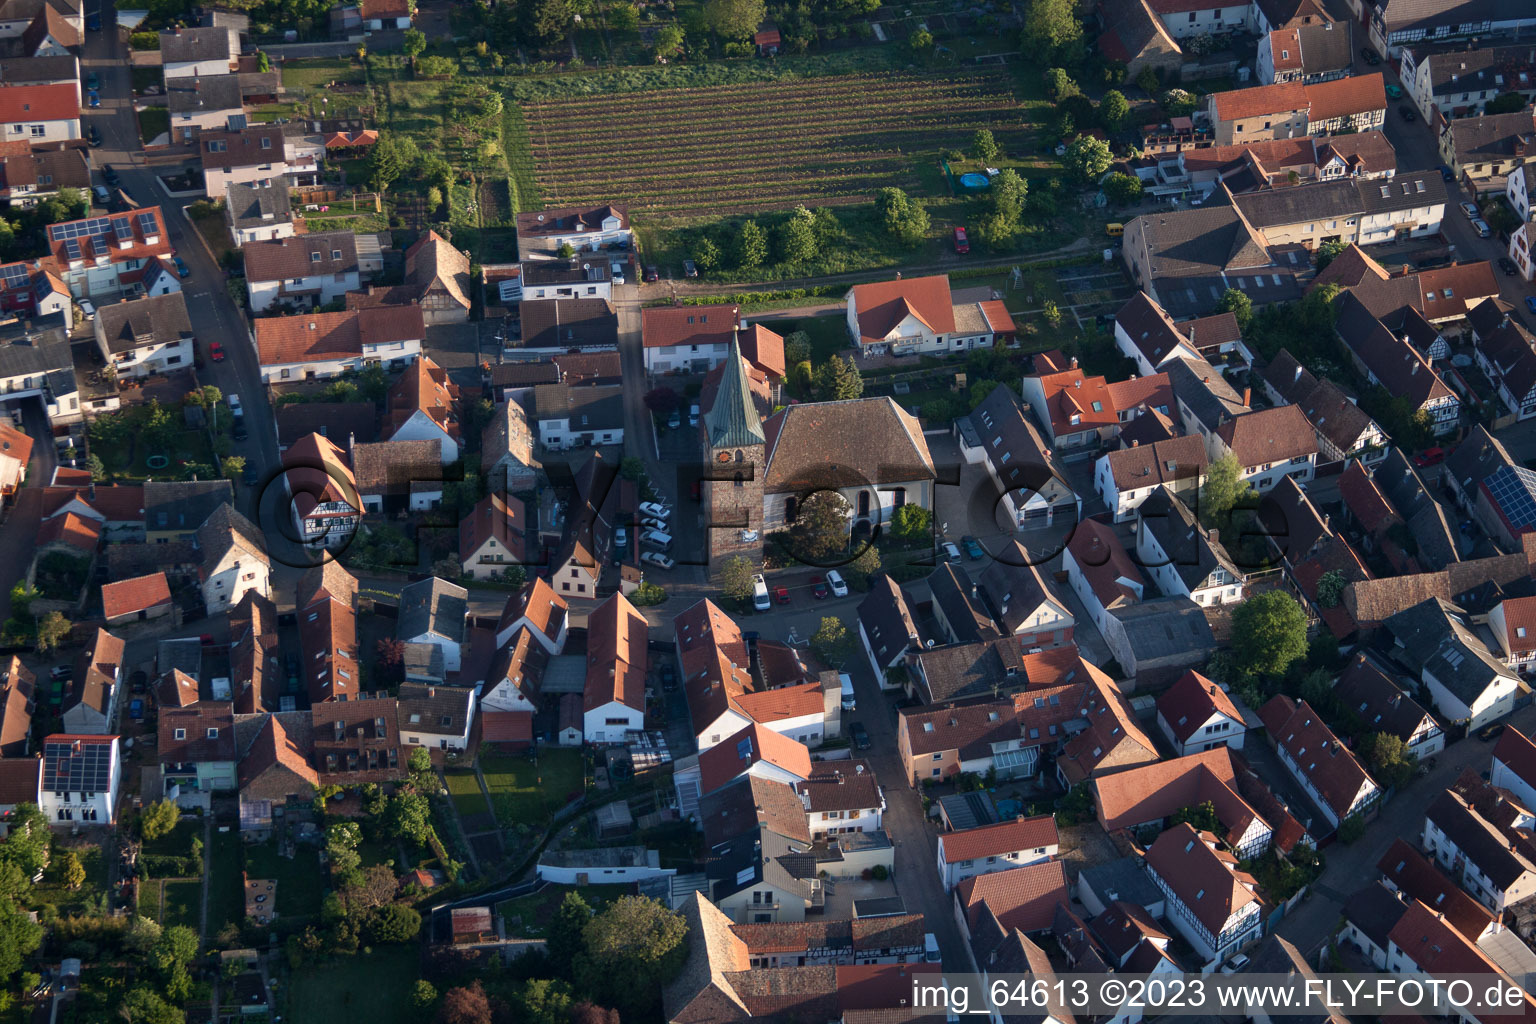 Drone image of District Lachen in Neustadt an der Weinstraße in the state Rhineland-Palatinate, Germany